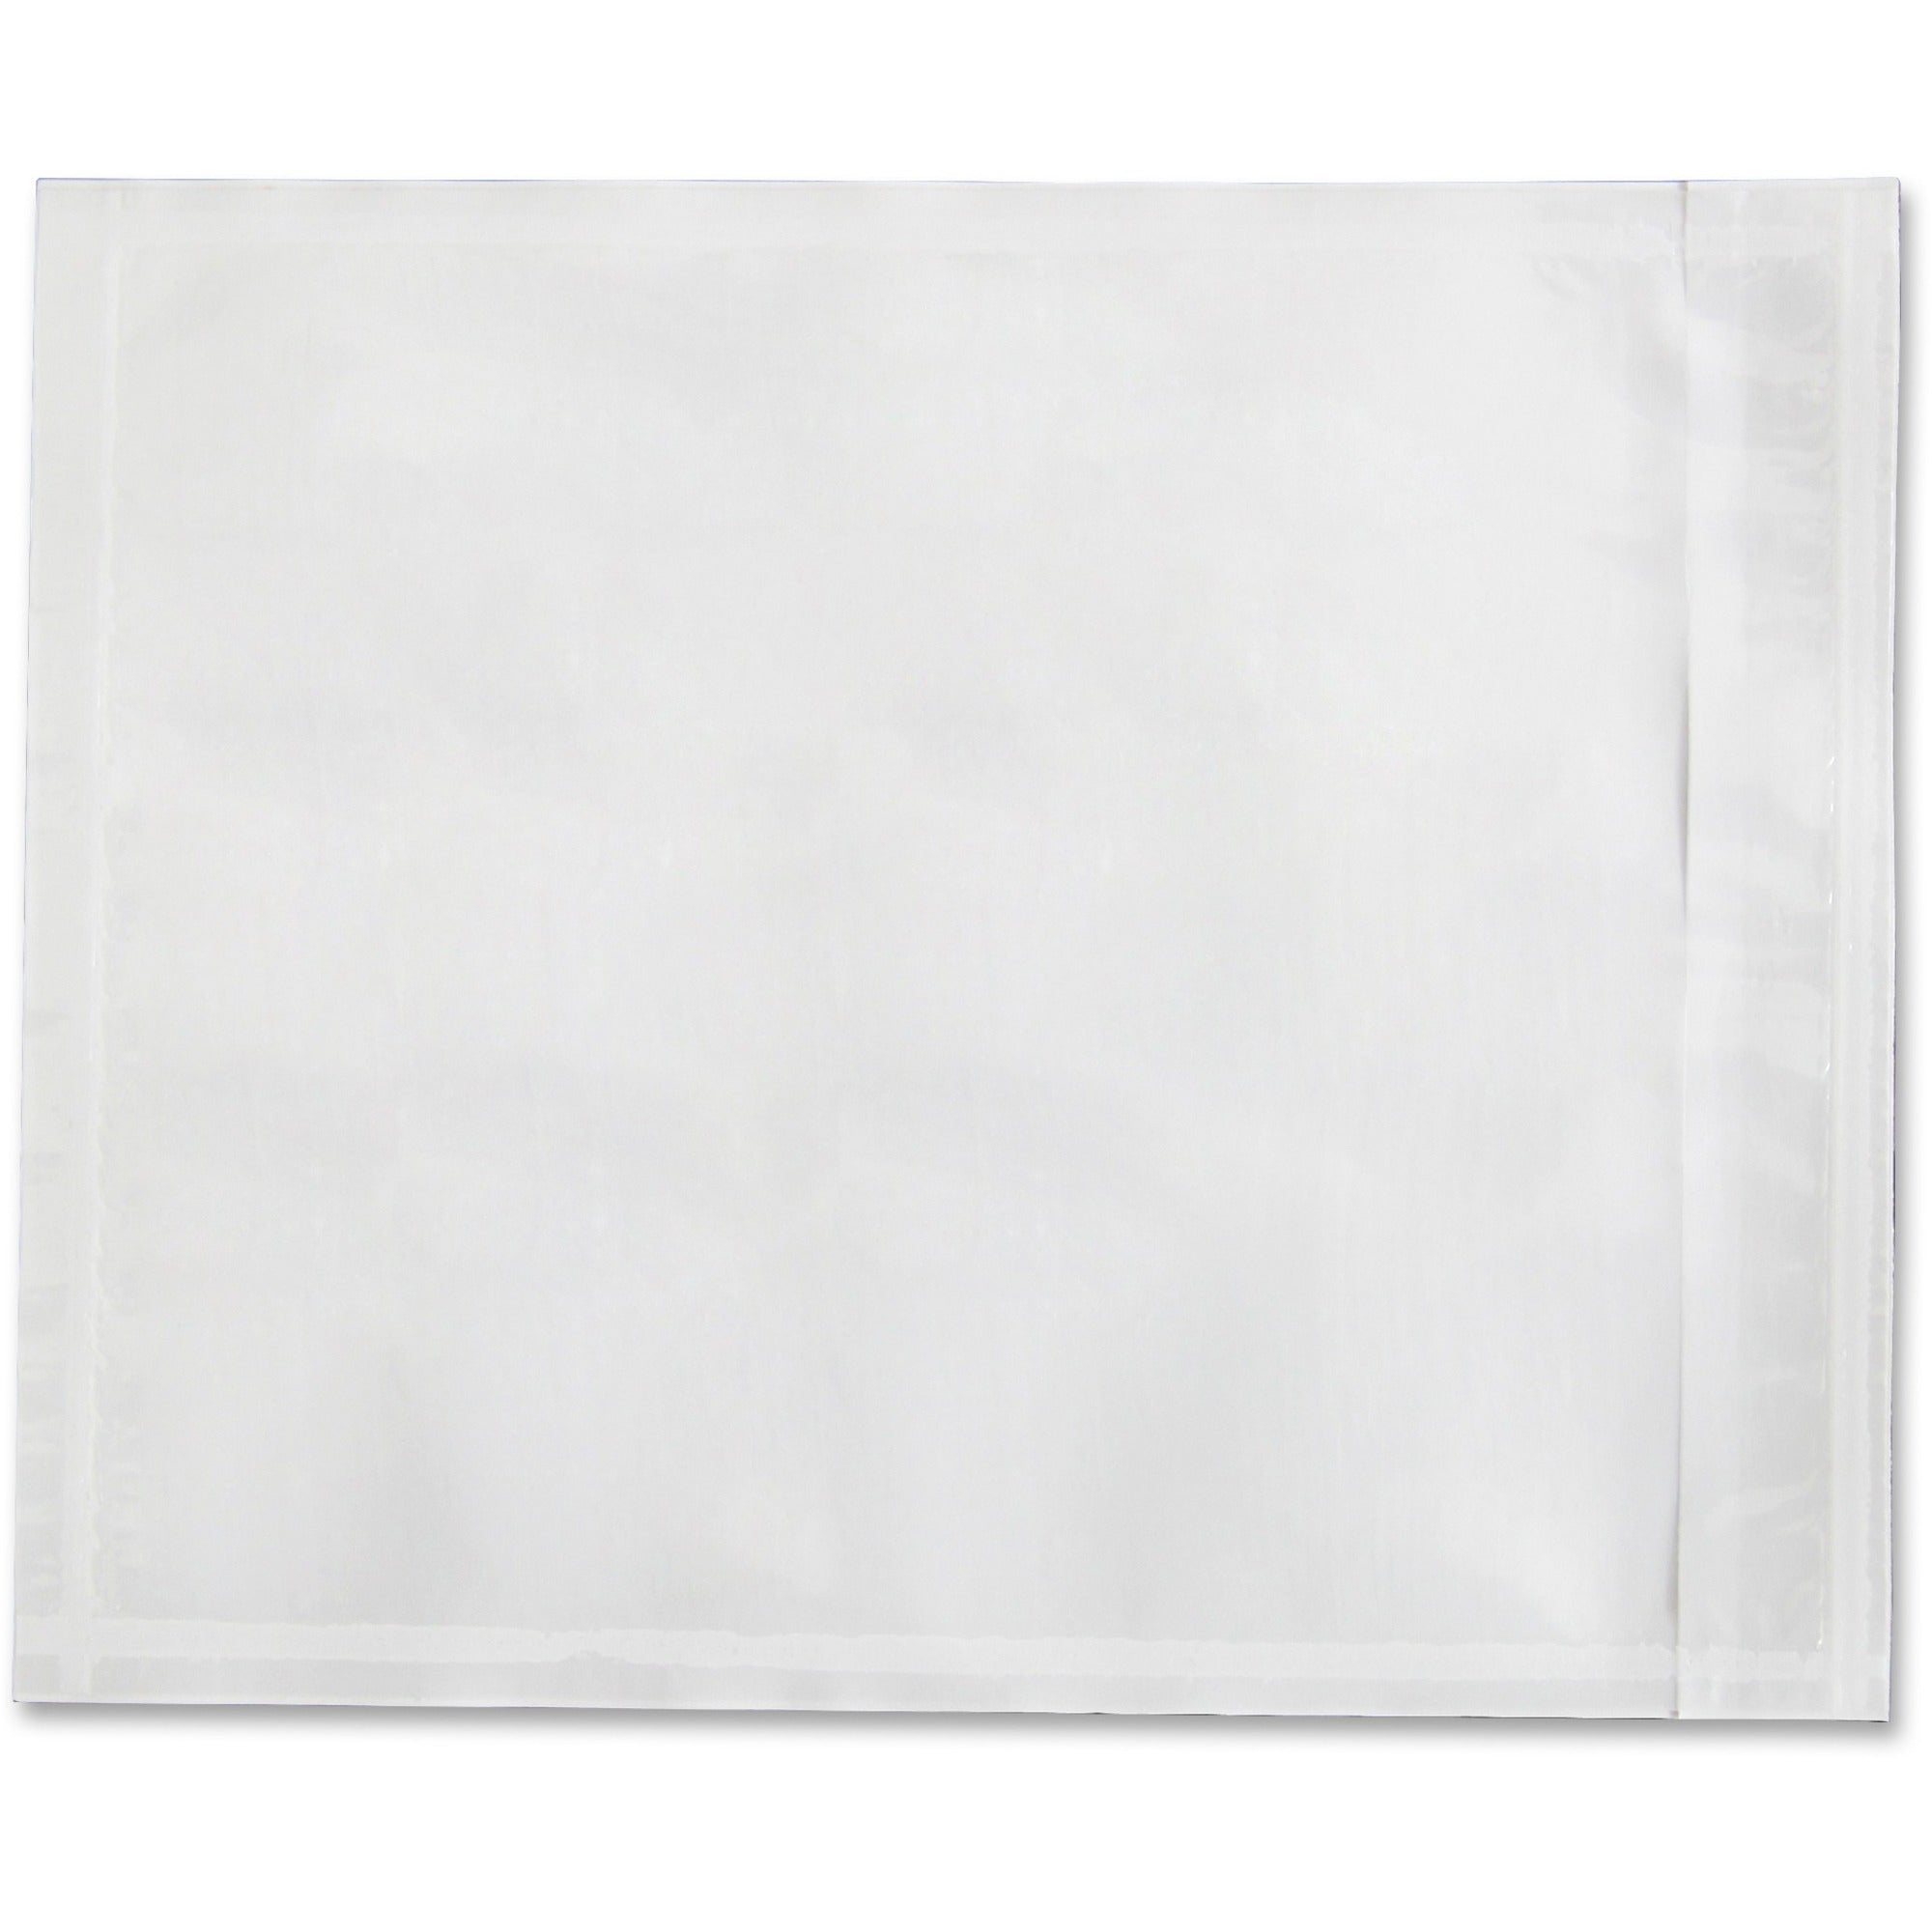 Sparco Plain Back 7" Envelopes - Packing List - 7" Width x 5 1/2" Length - 70 g/m2 - Self-adhesive Seal - Paper, Low Density Polyethylene (LDPE) - 1000 / Box - White - 